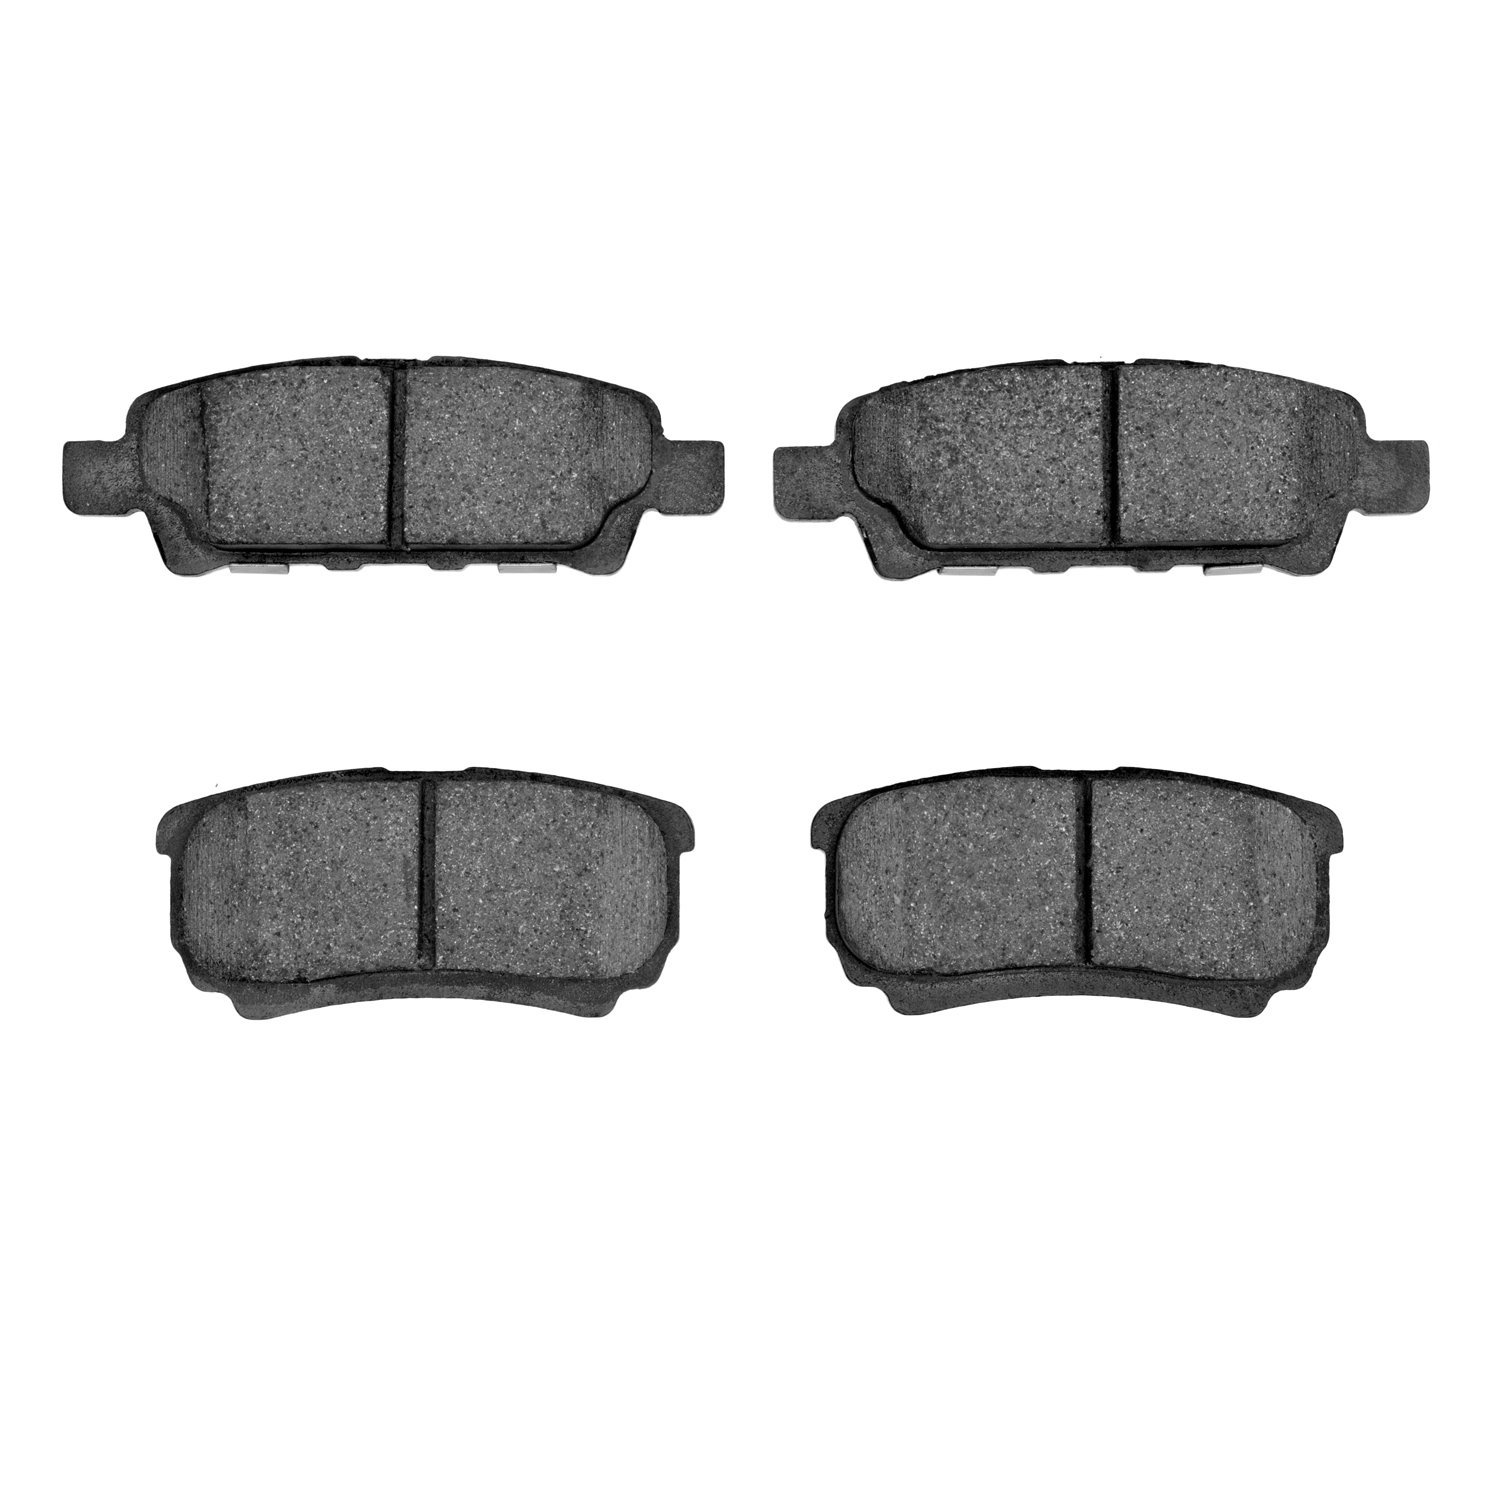 1310-1037-00 3000-Series Ceramic Brake Pads, 2004-2017 Multiple Makes/Models, Position: Rear